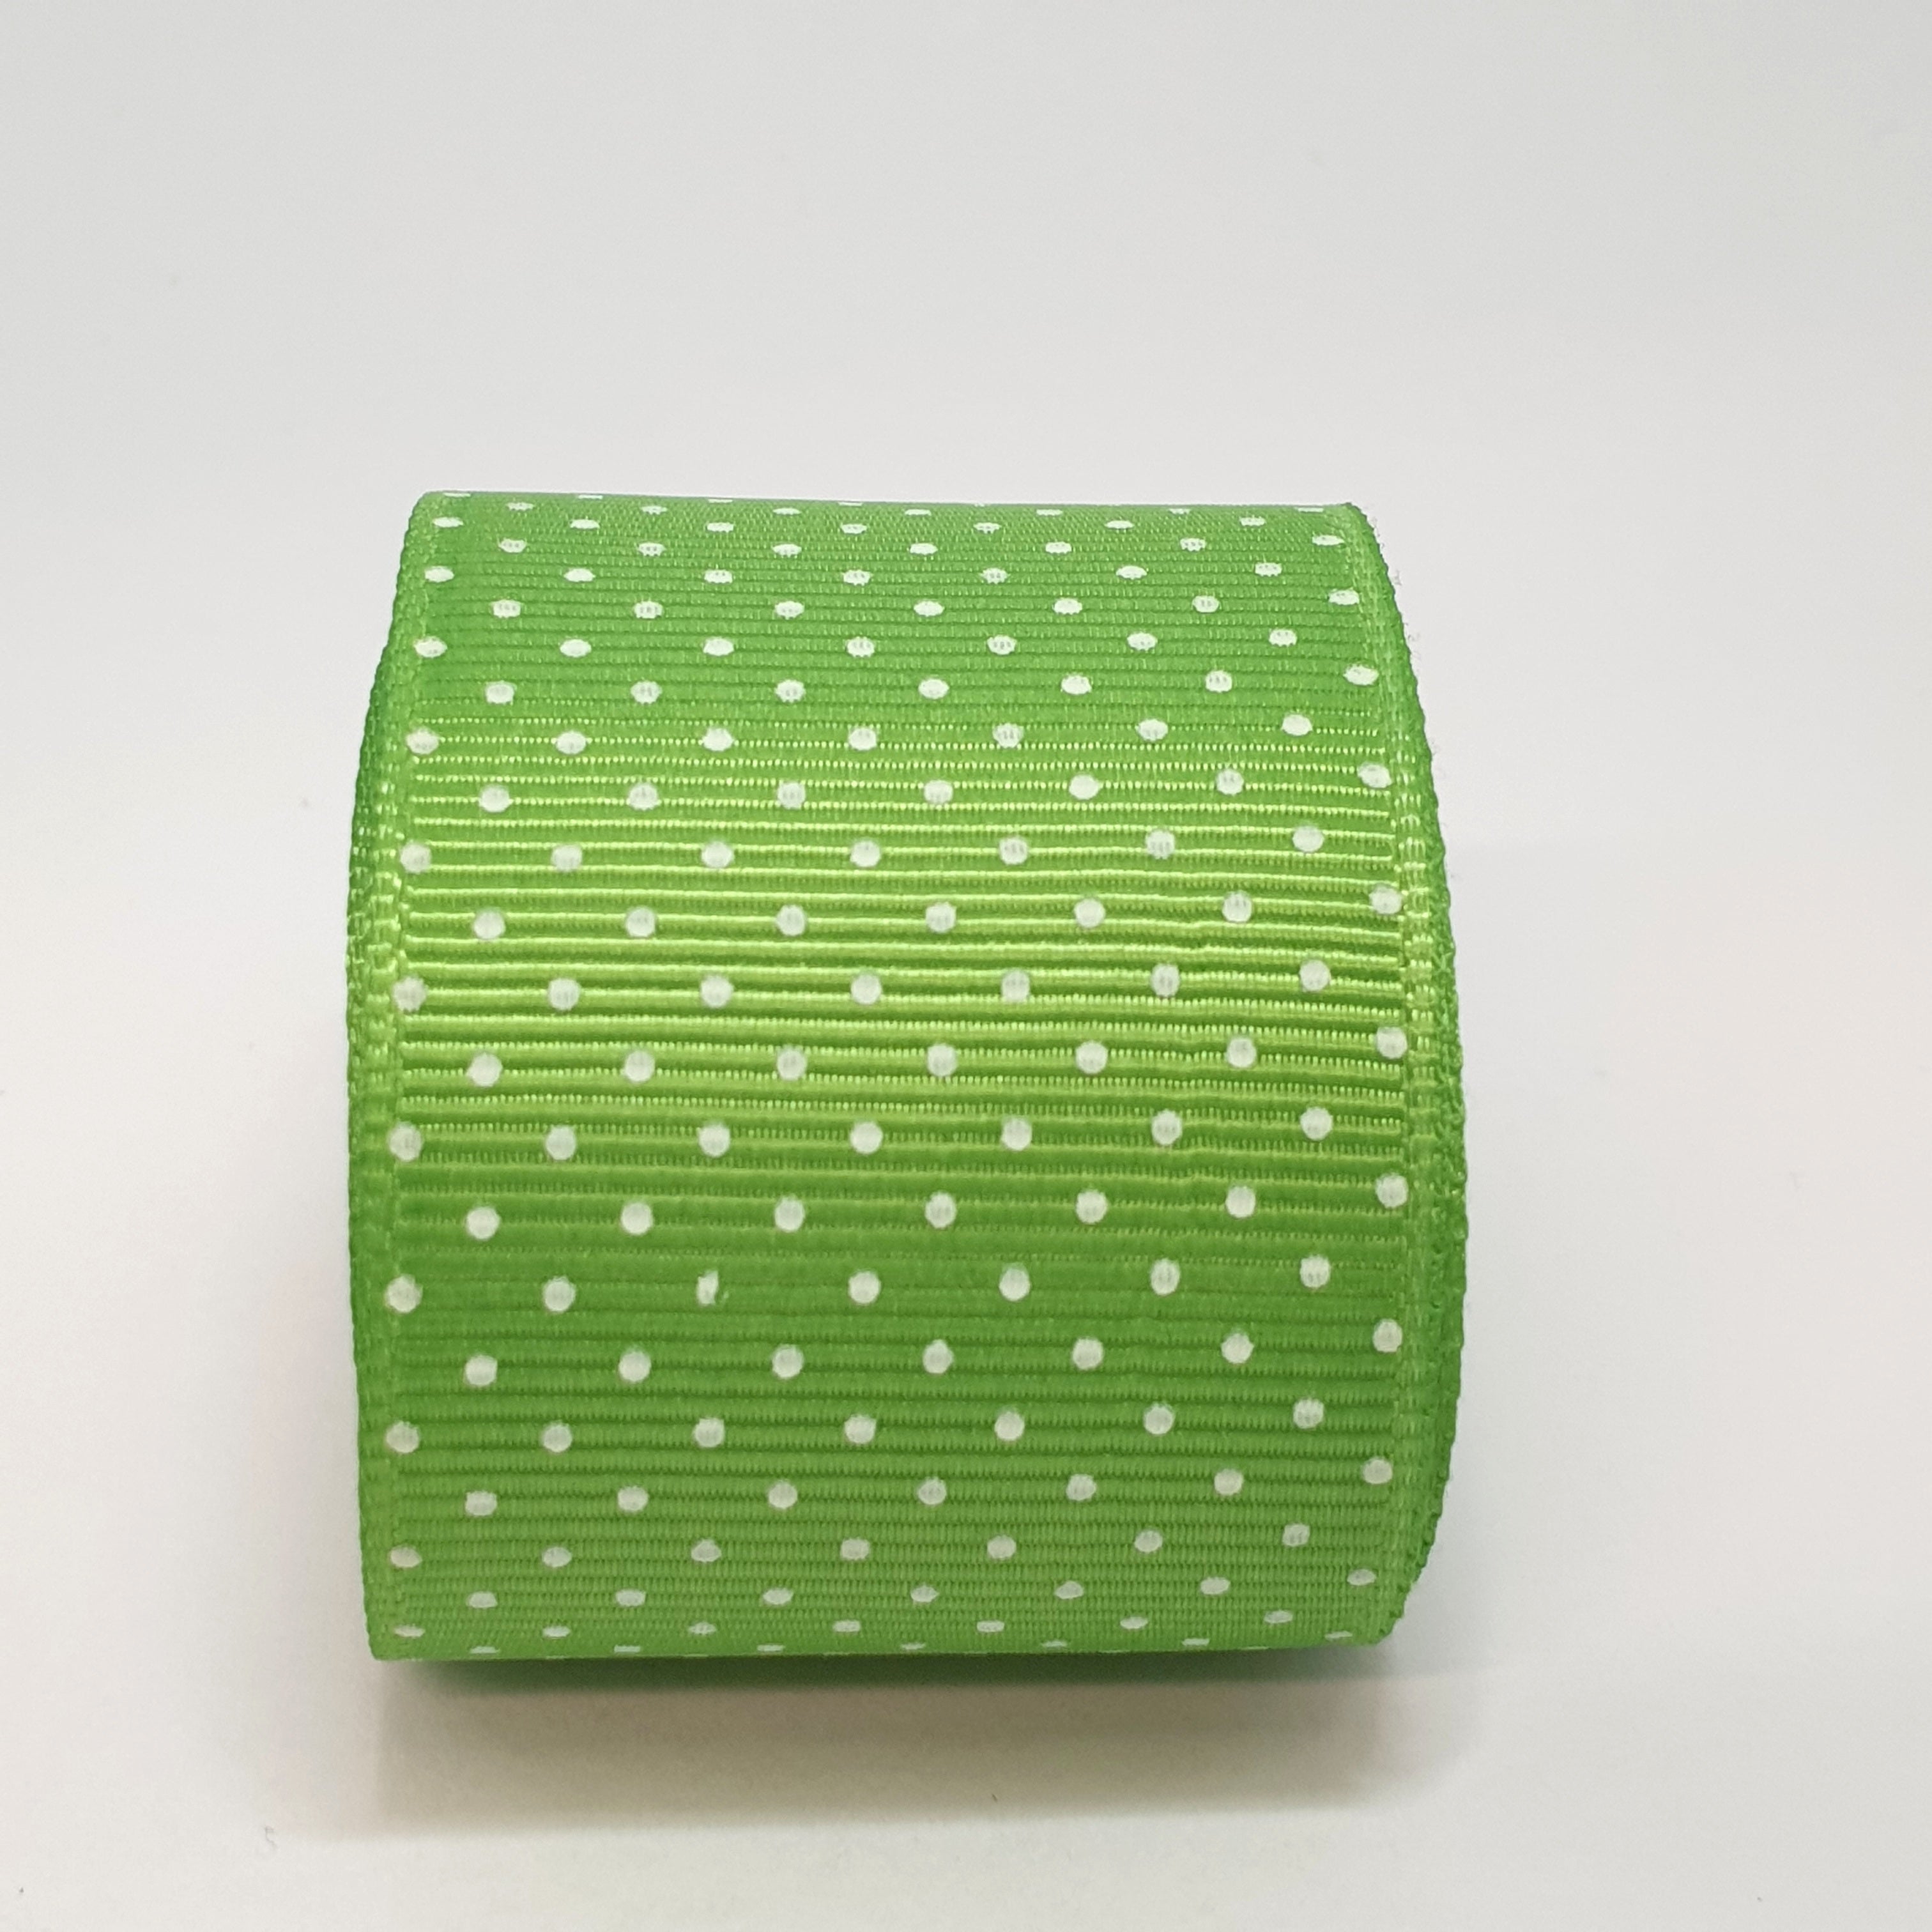 MajorCrafts 40mm 1metre Lime Green Polka Dot Single Sided Grosgrain Fabric Ribbon